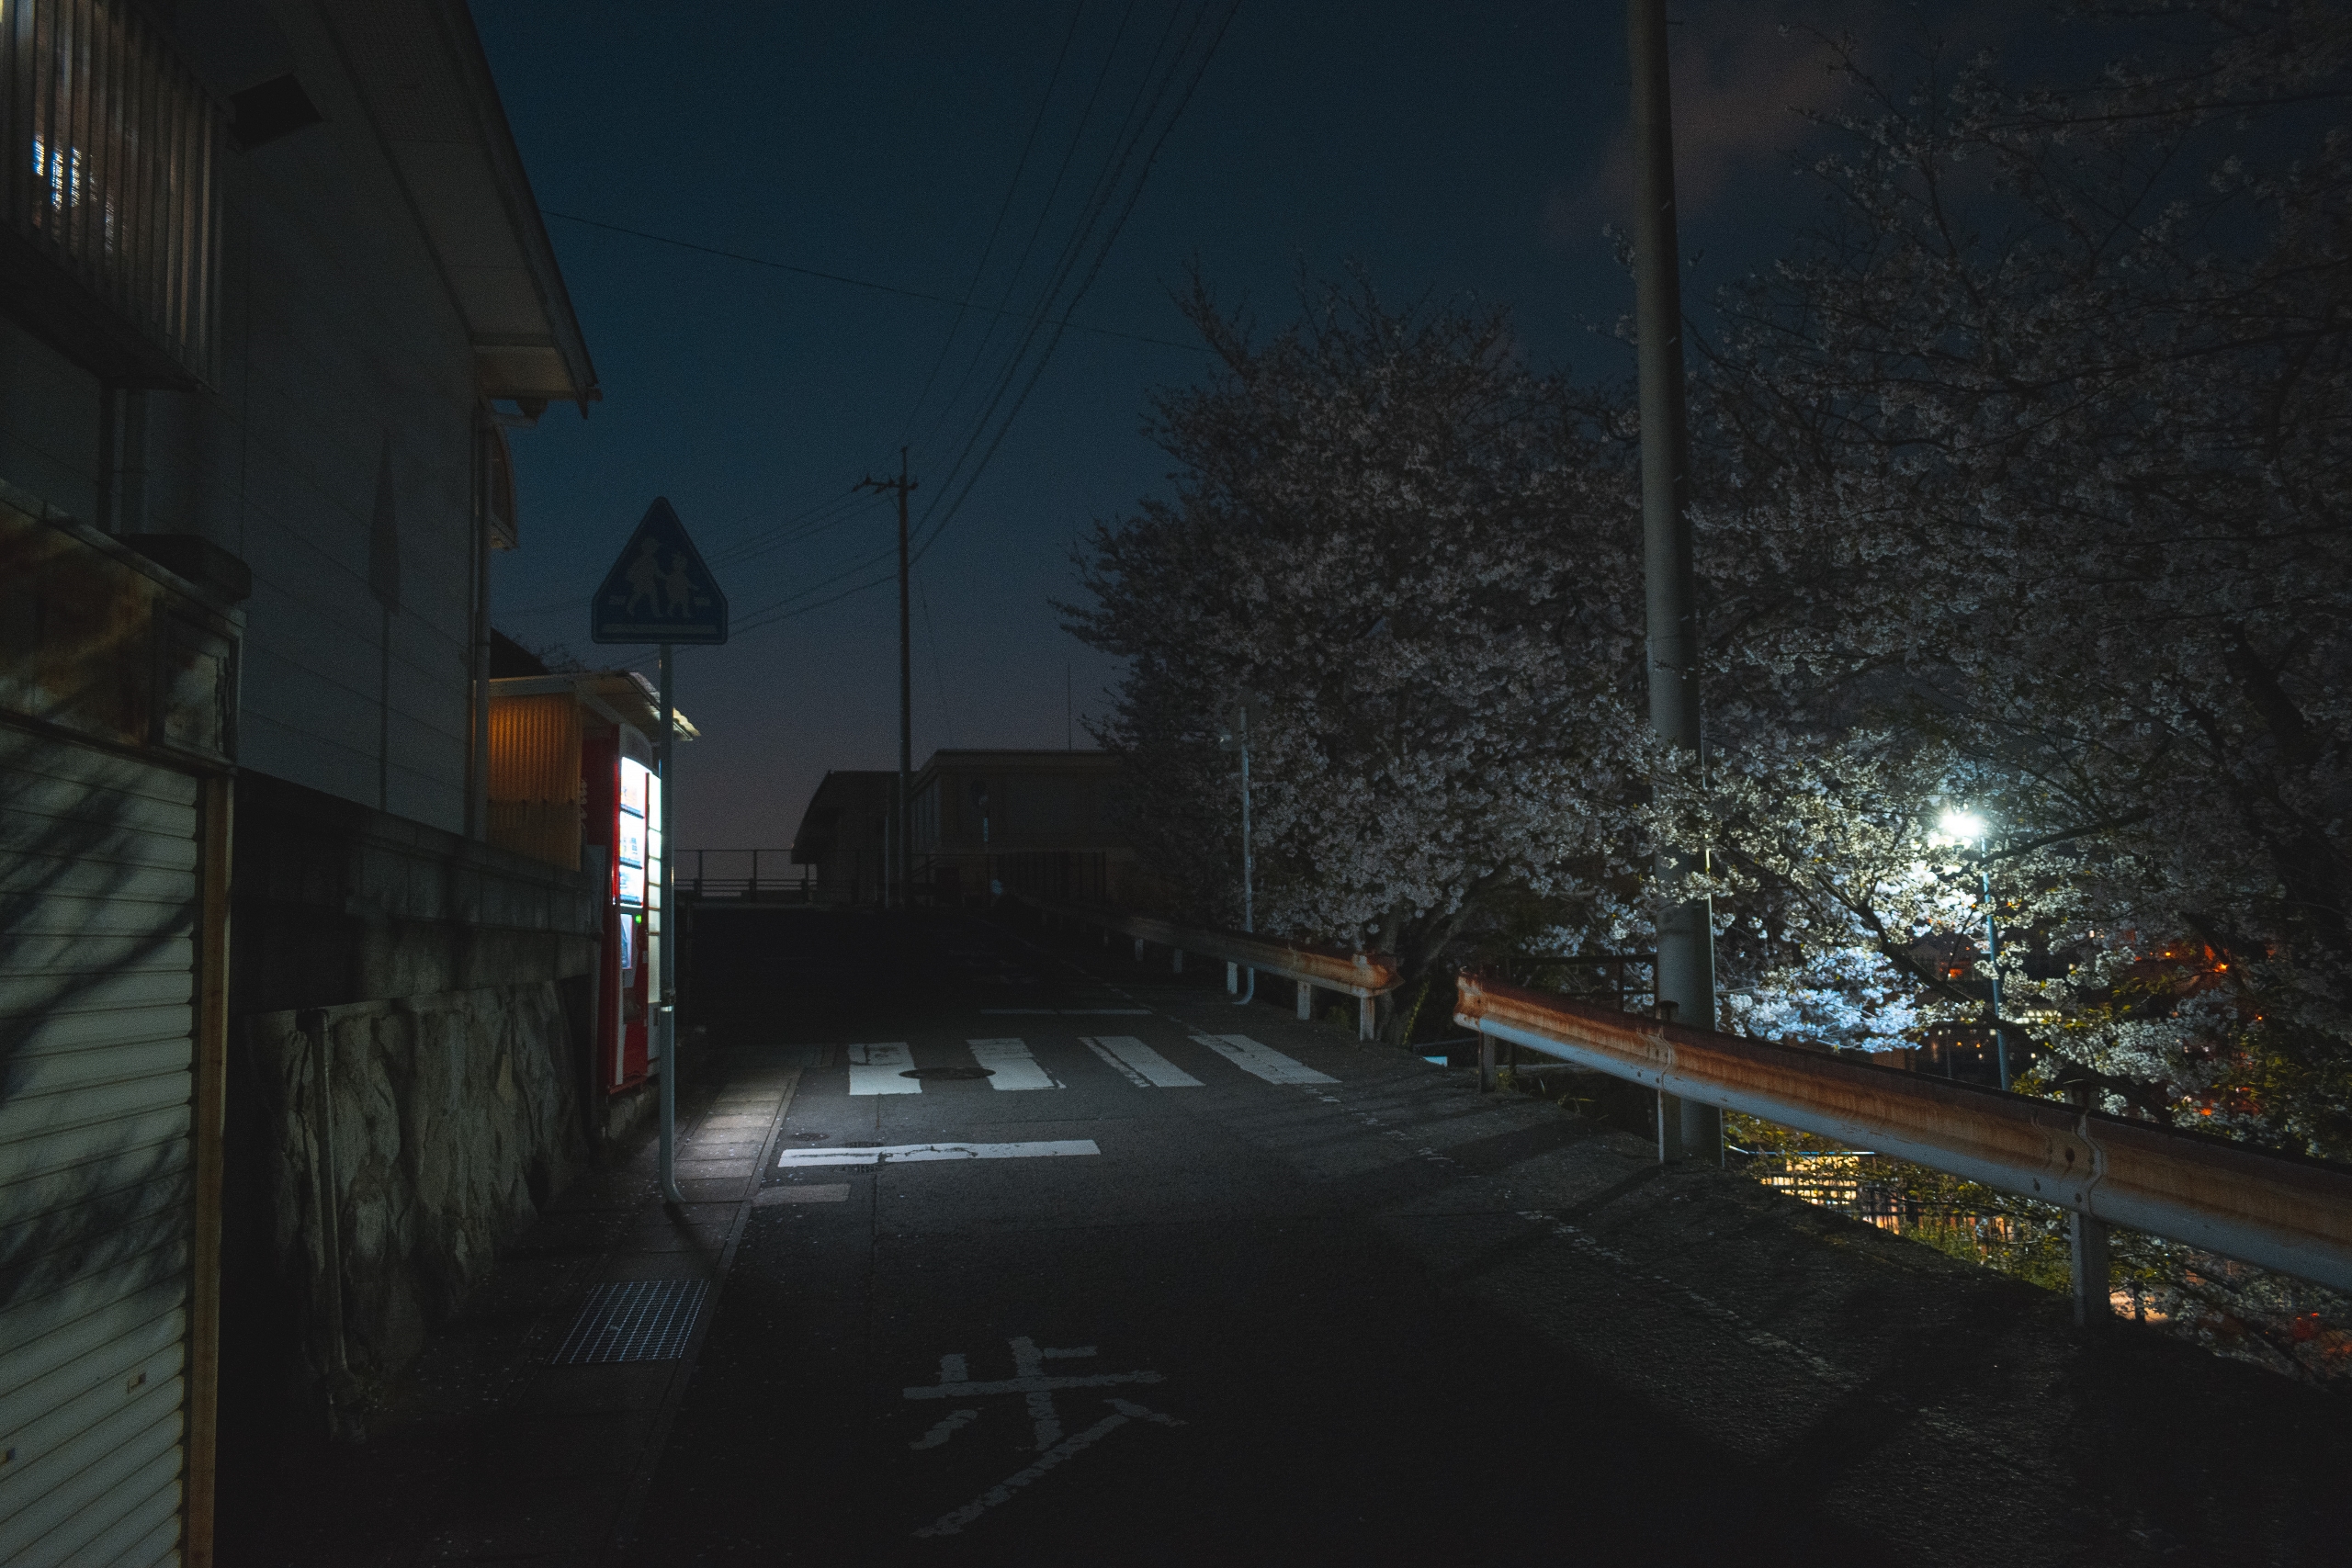 General 2560x1707 Japan Nagasaki night cherry blossom urban street Asia low light